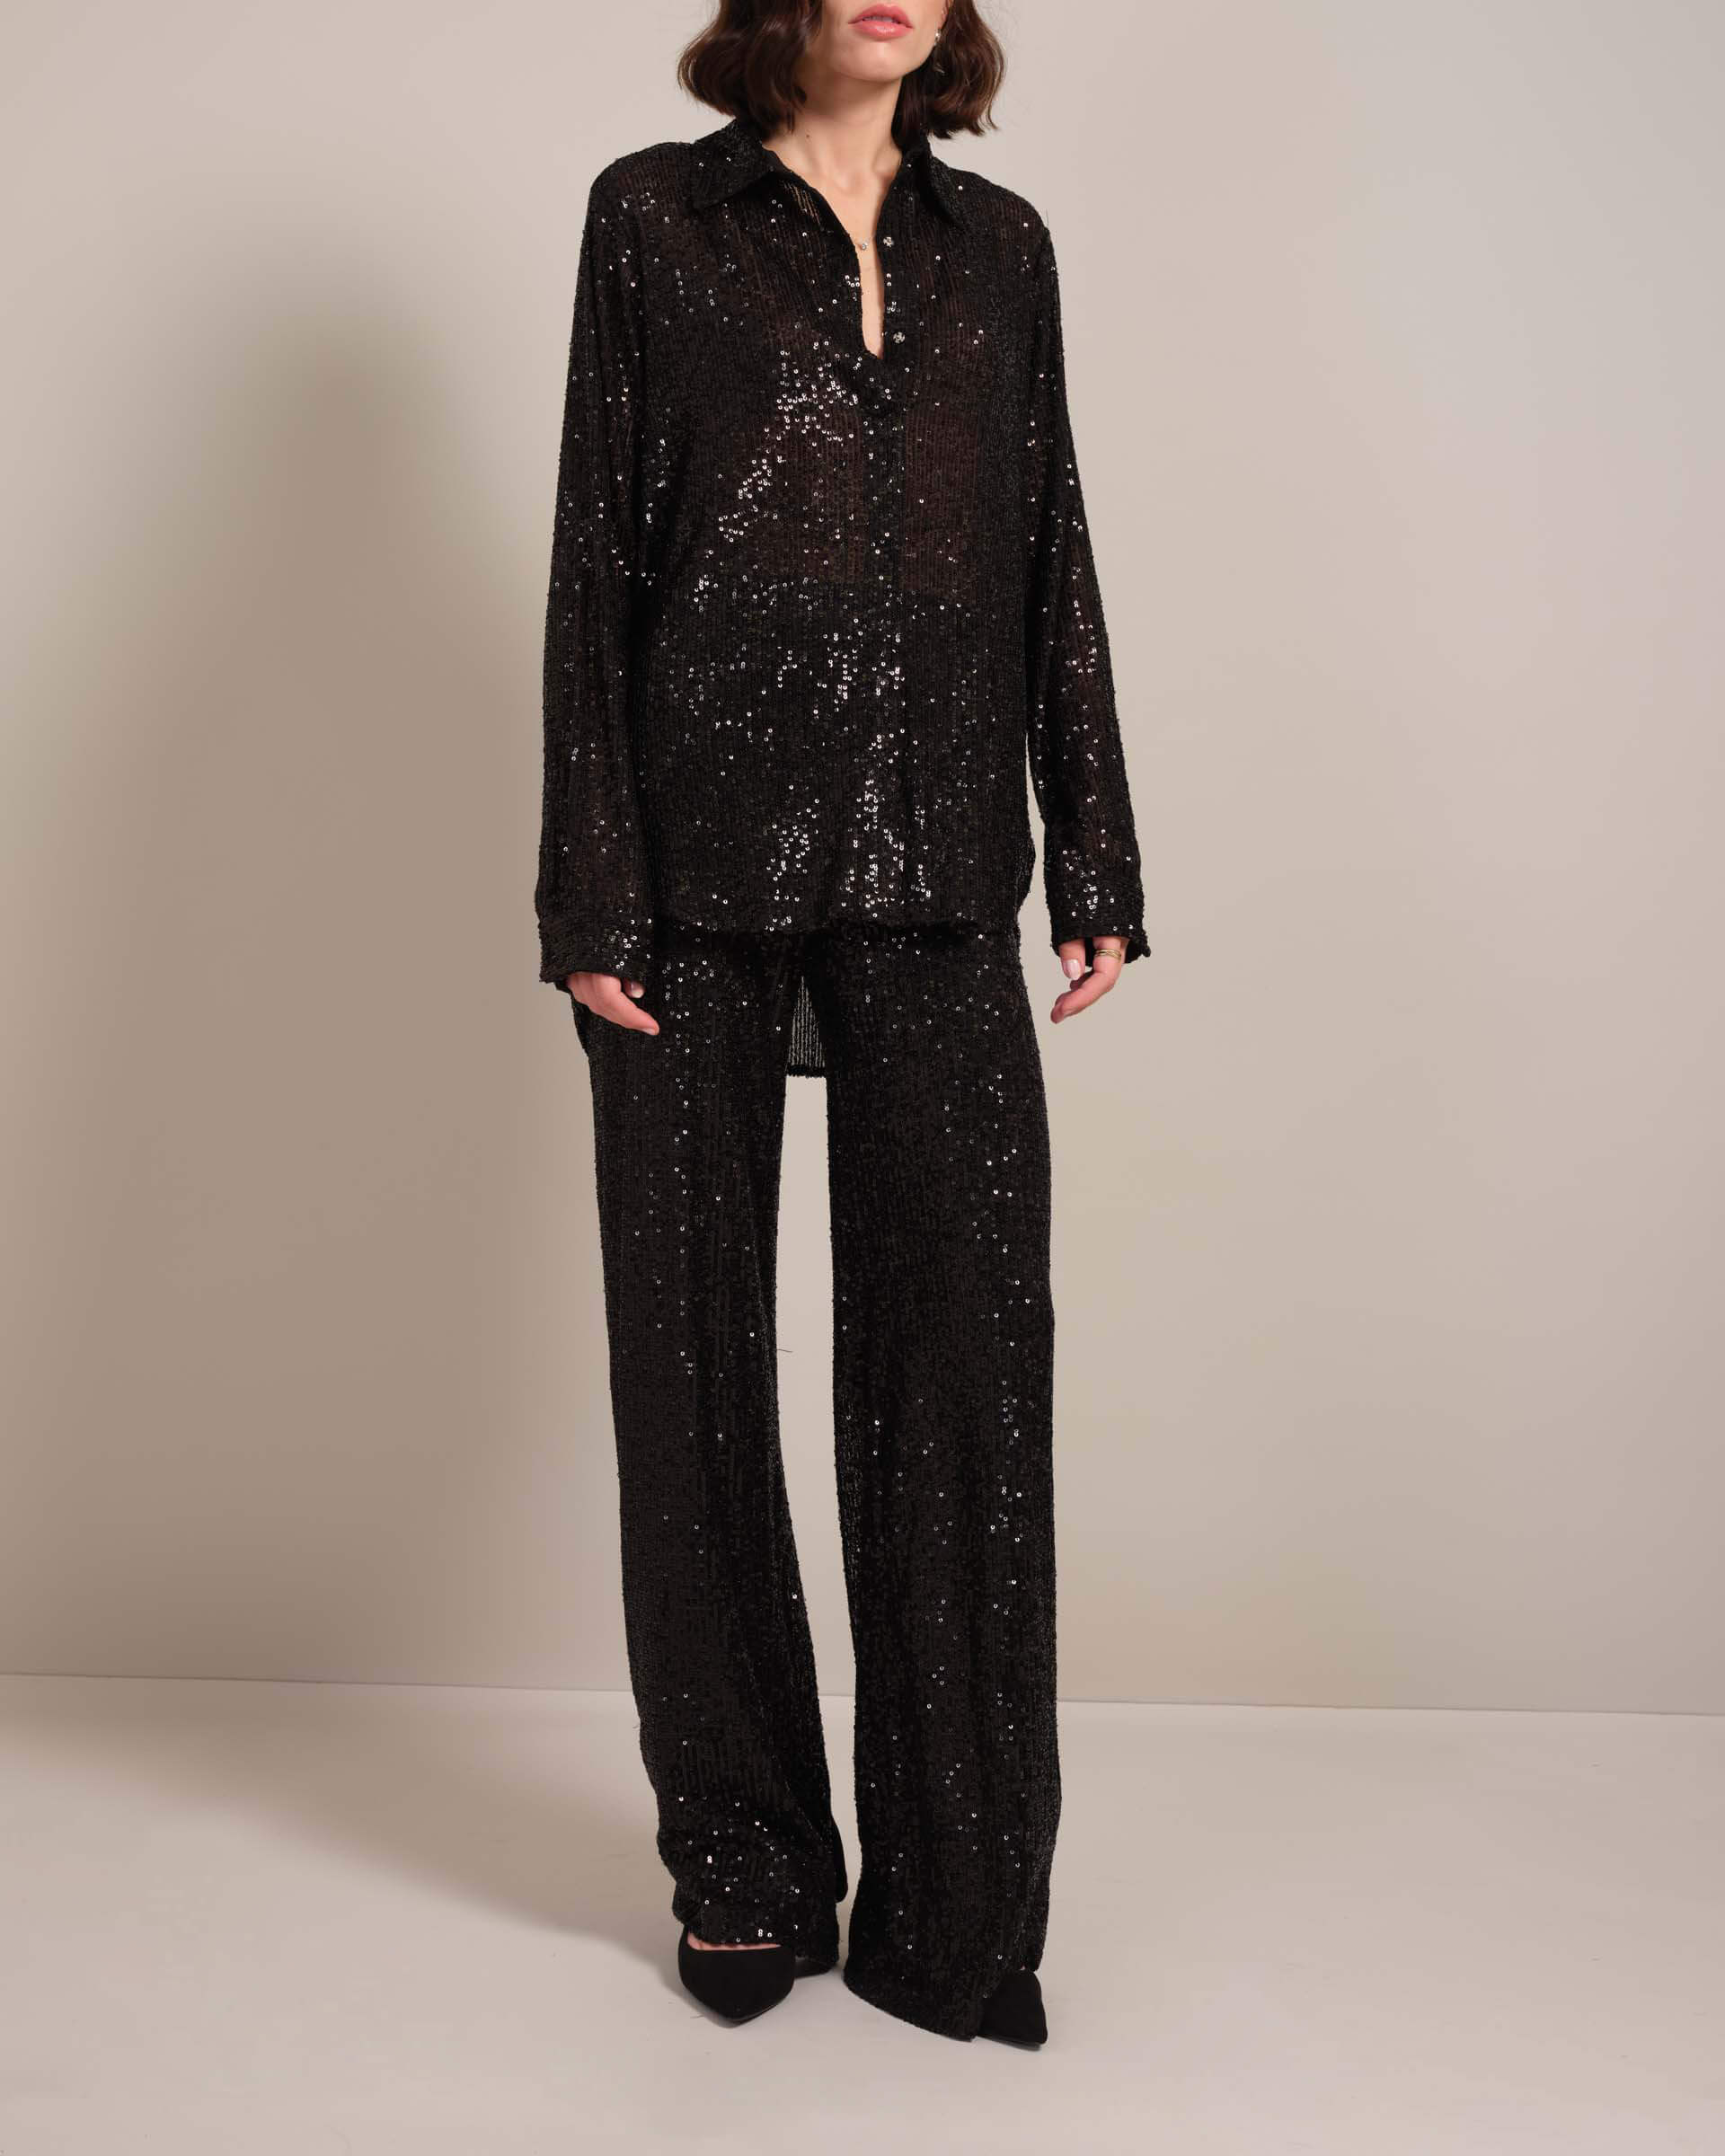 Shop Sequin Knit Mesh Collared Shirt | Catherine Malandrino | JANE + MERCER